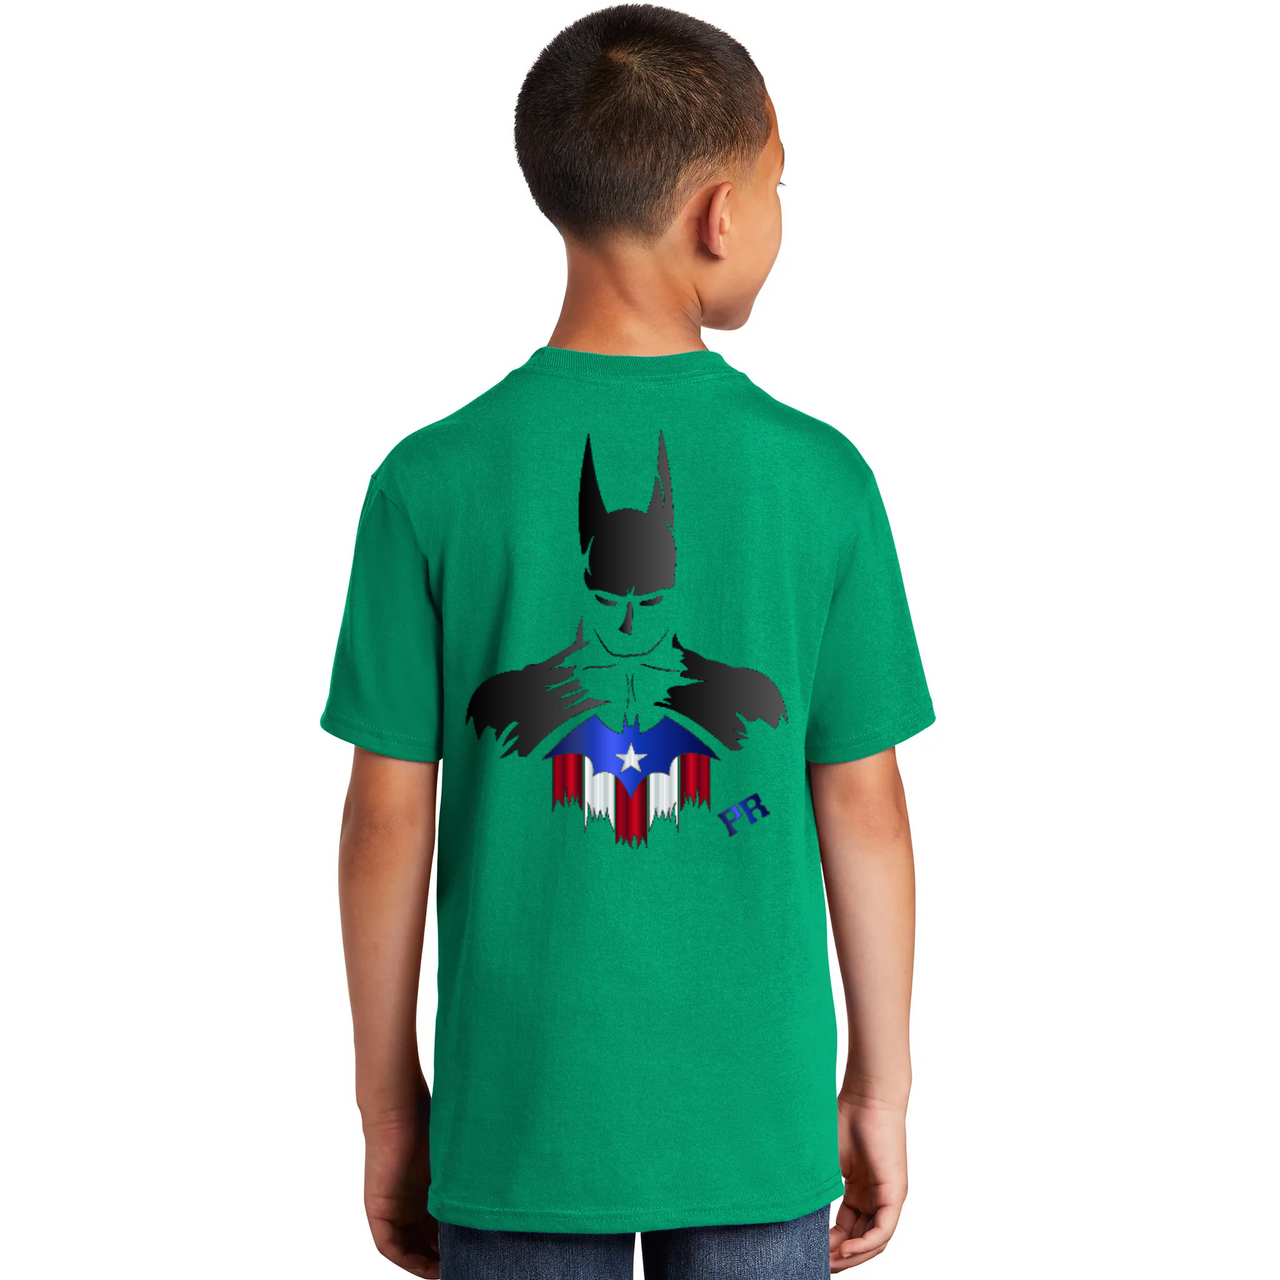 Puerto Rican Bat Man Front and Back Image Kids T-Shirt